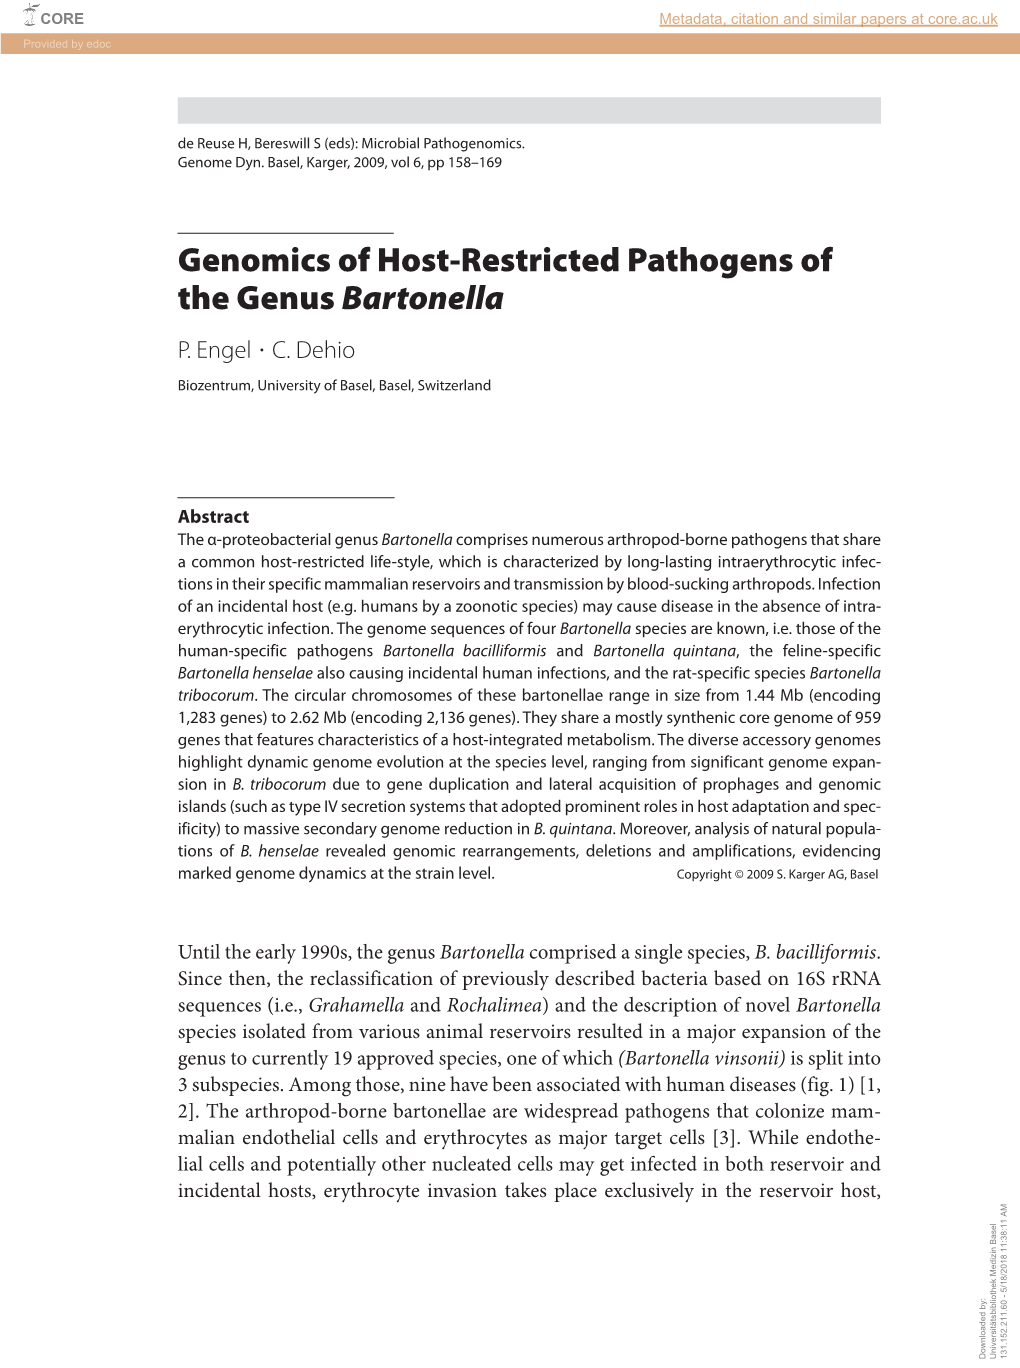 Genomics of Host-Restricted Pathogens of the Genus Bartonella P